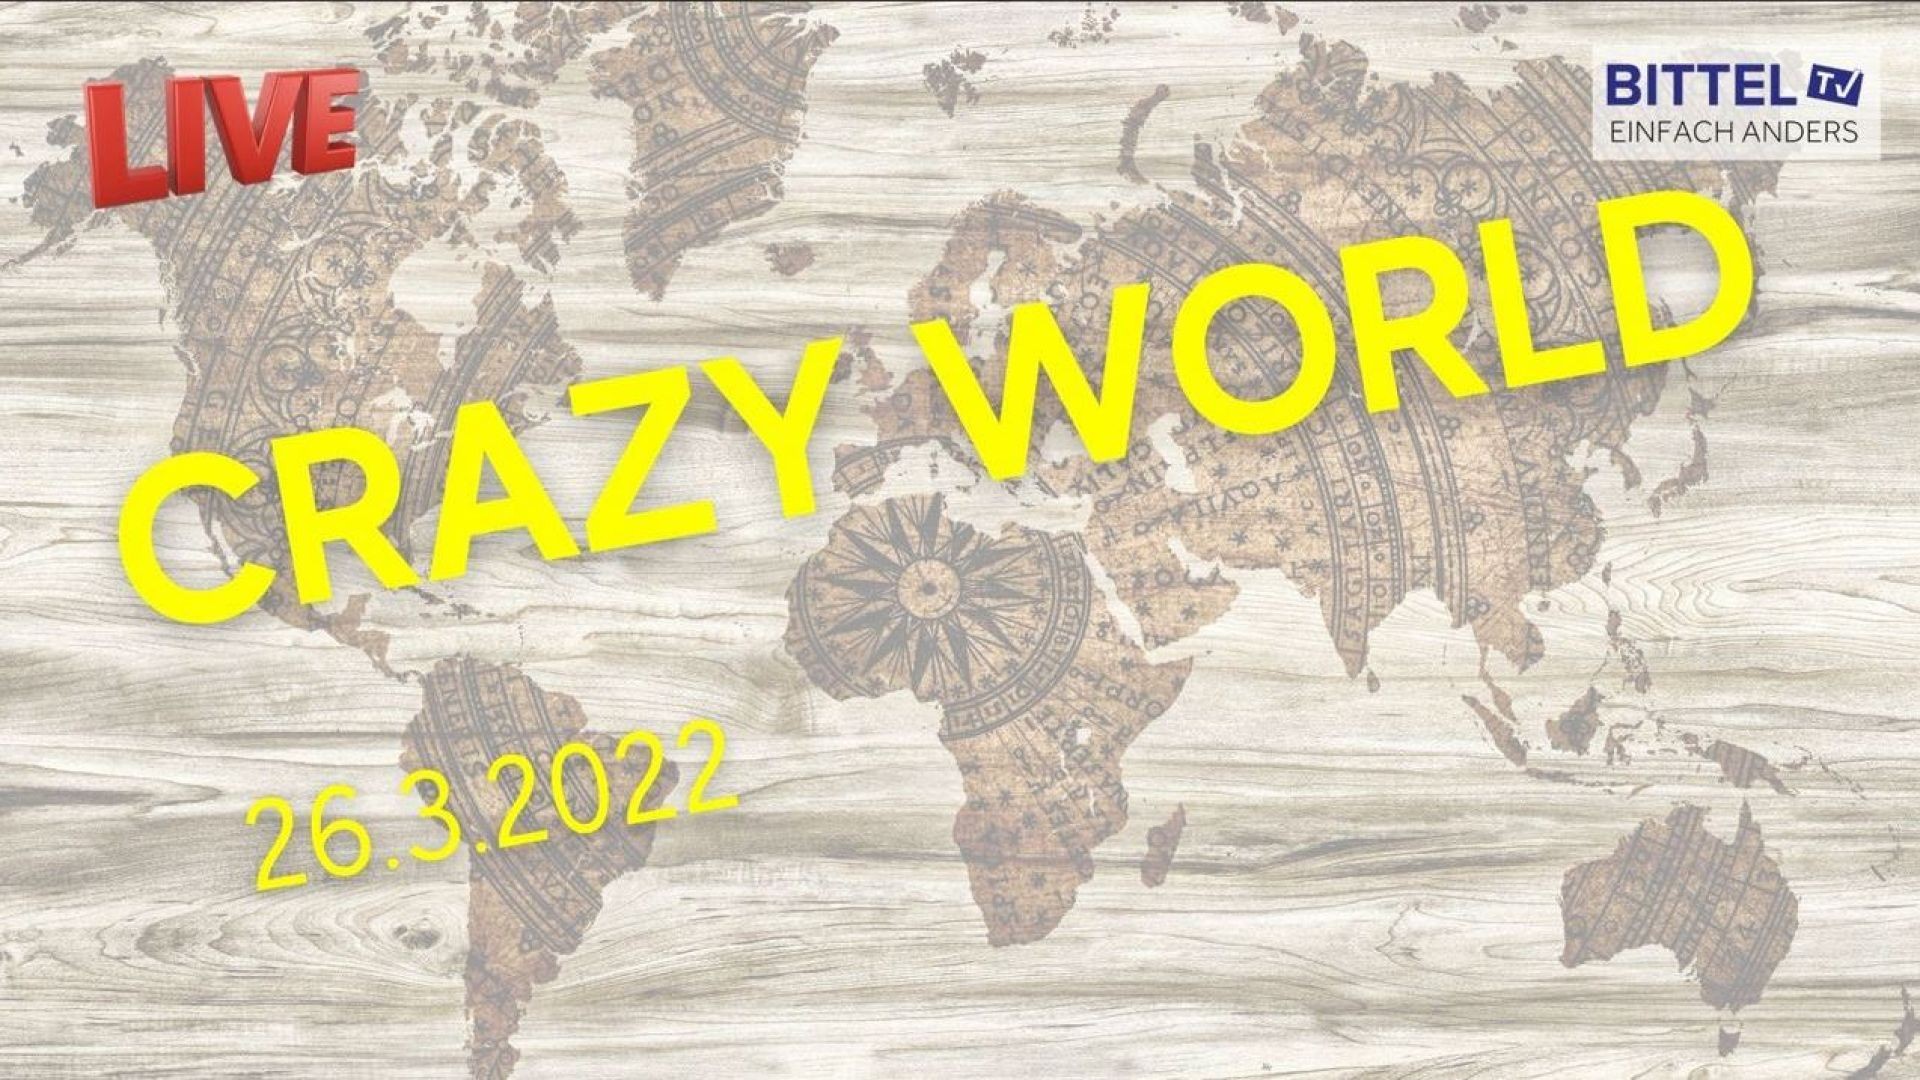 CRAZY WORLD - 26.03.22